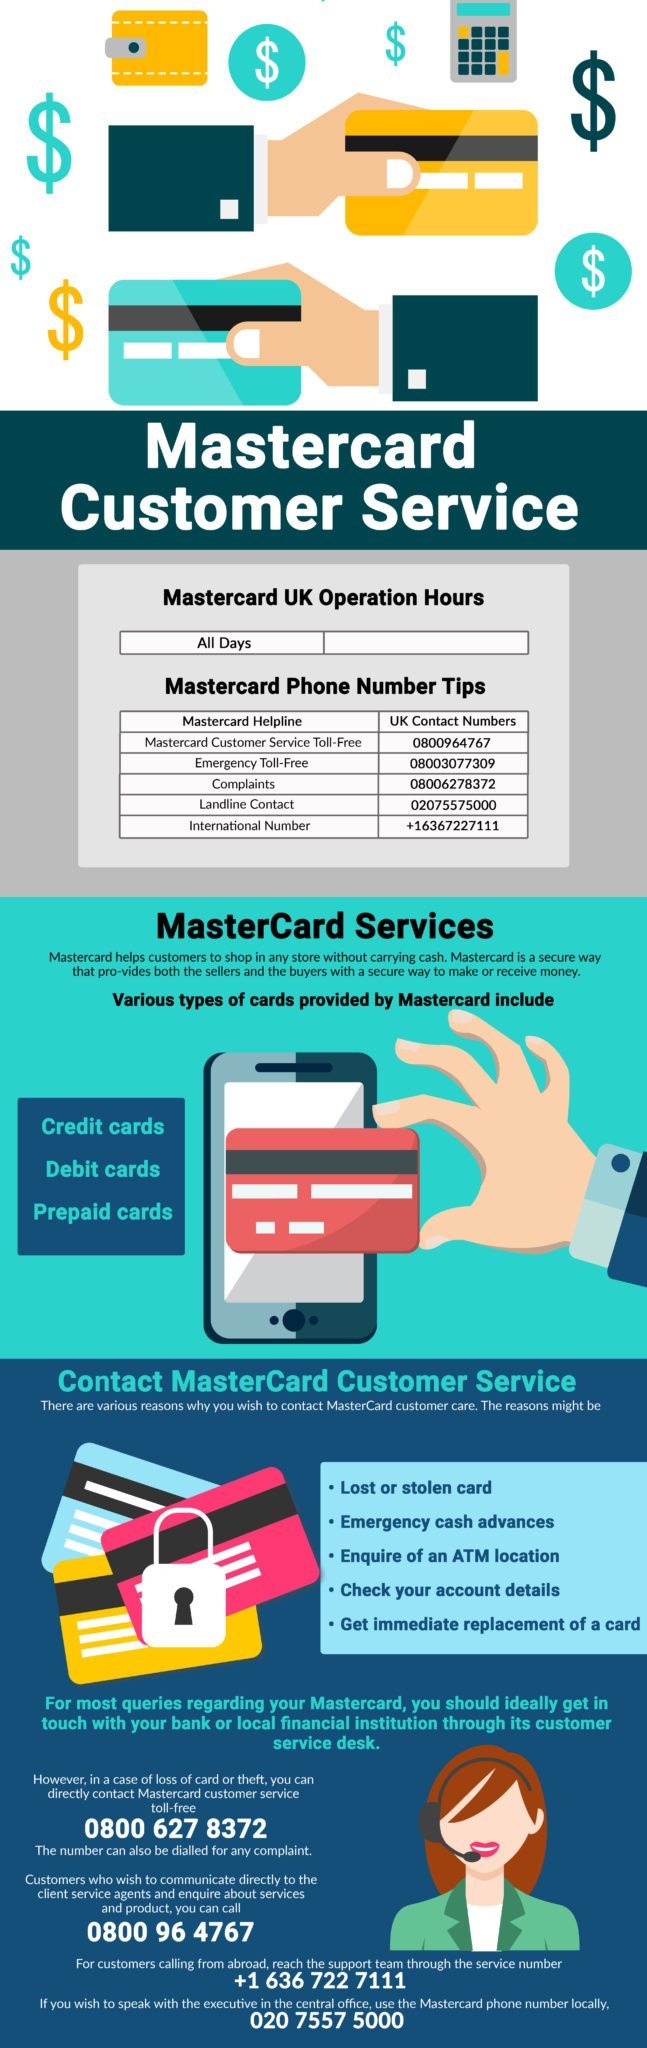 indigo mastercard customer service phone number